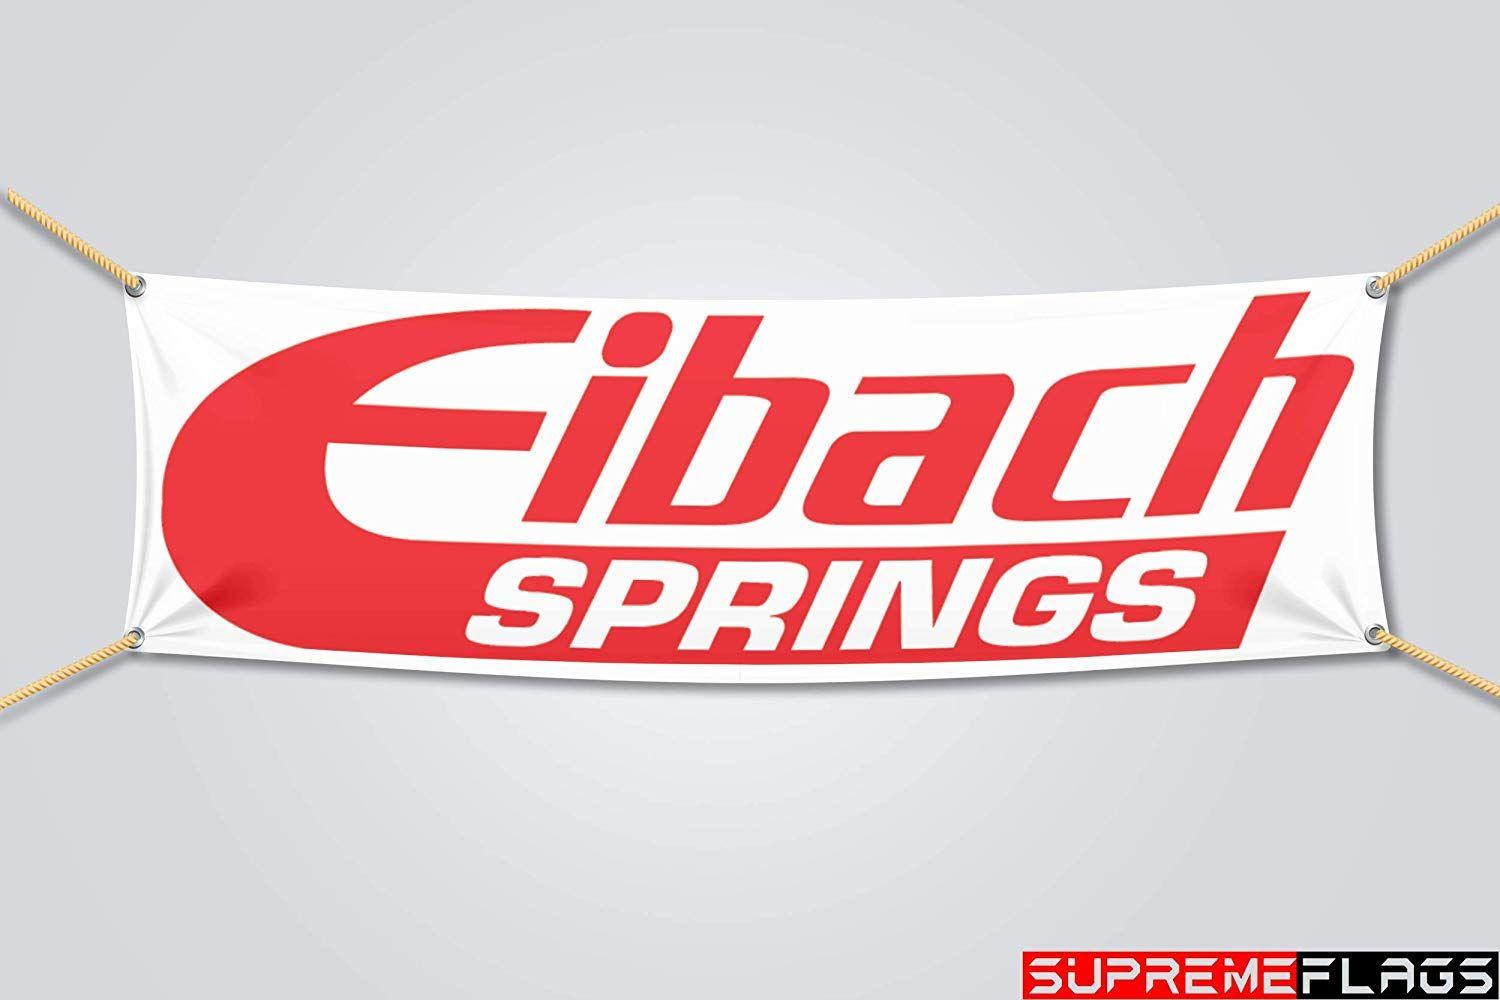 Eibach Logo - Amazon.com : Eibach Springs Flag Banner Car Racing Shop Garage ...